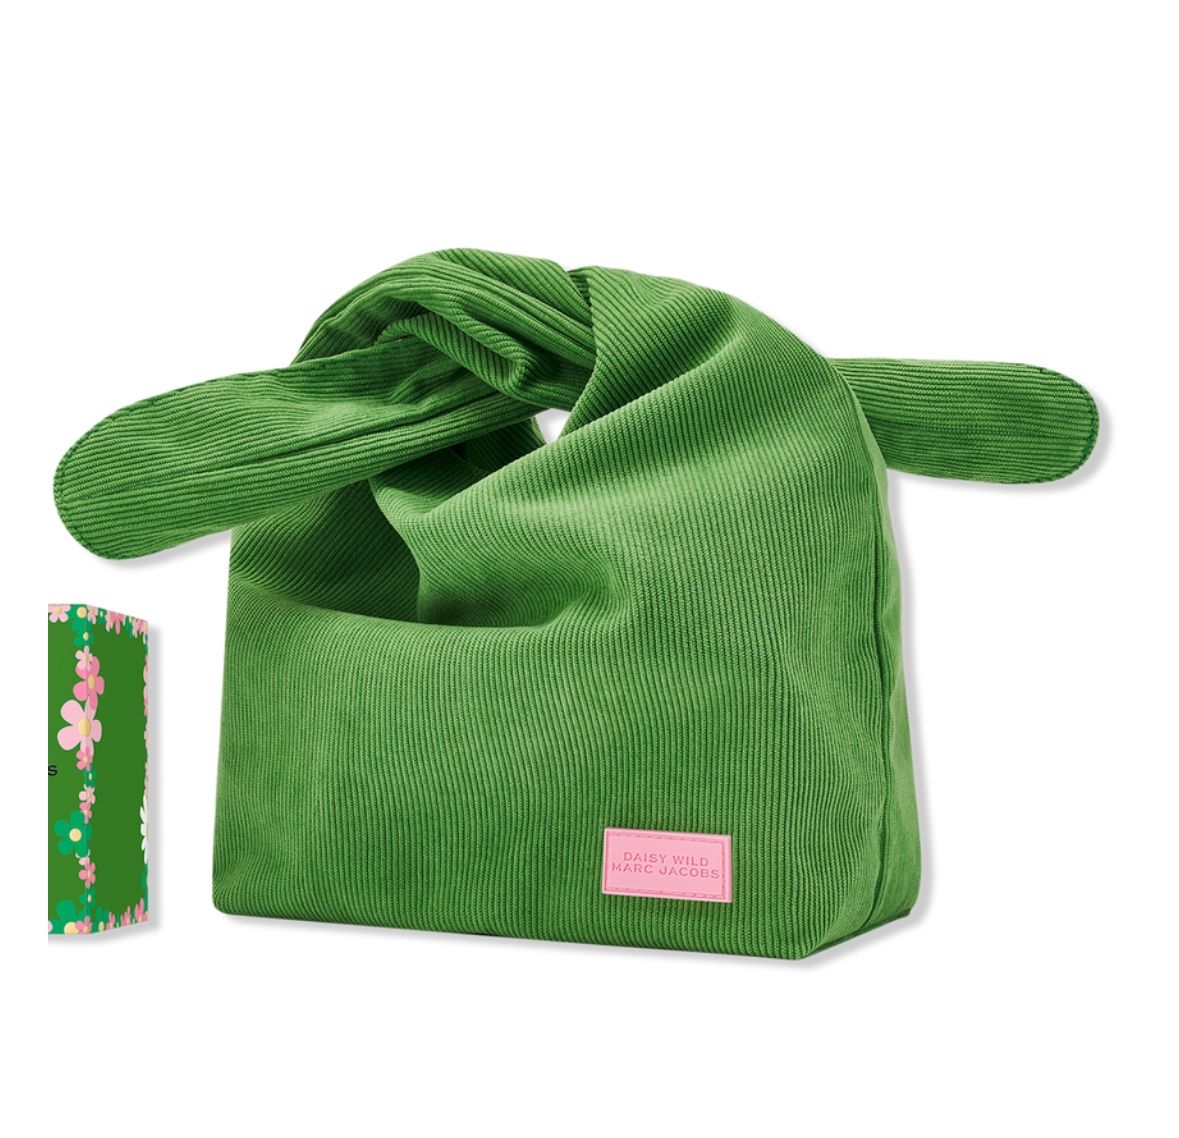 Marc Jacobs Daisy Wild Reversible Gift Bag Corduroy Tie Green